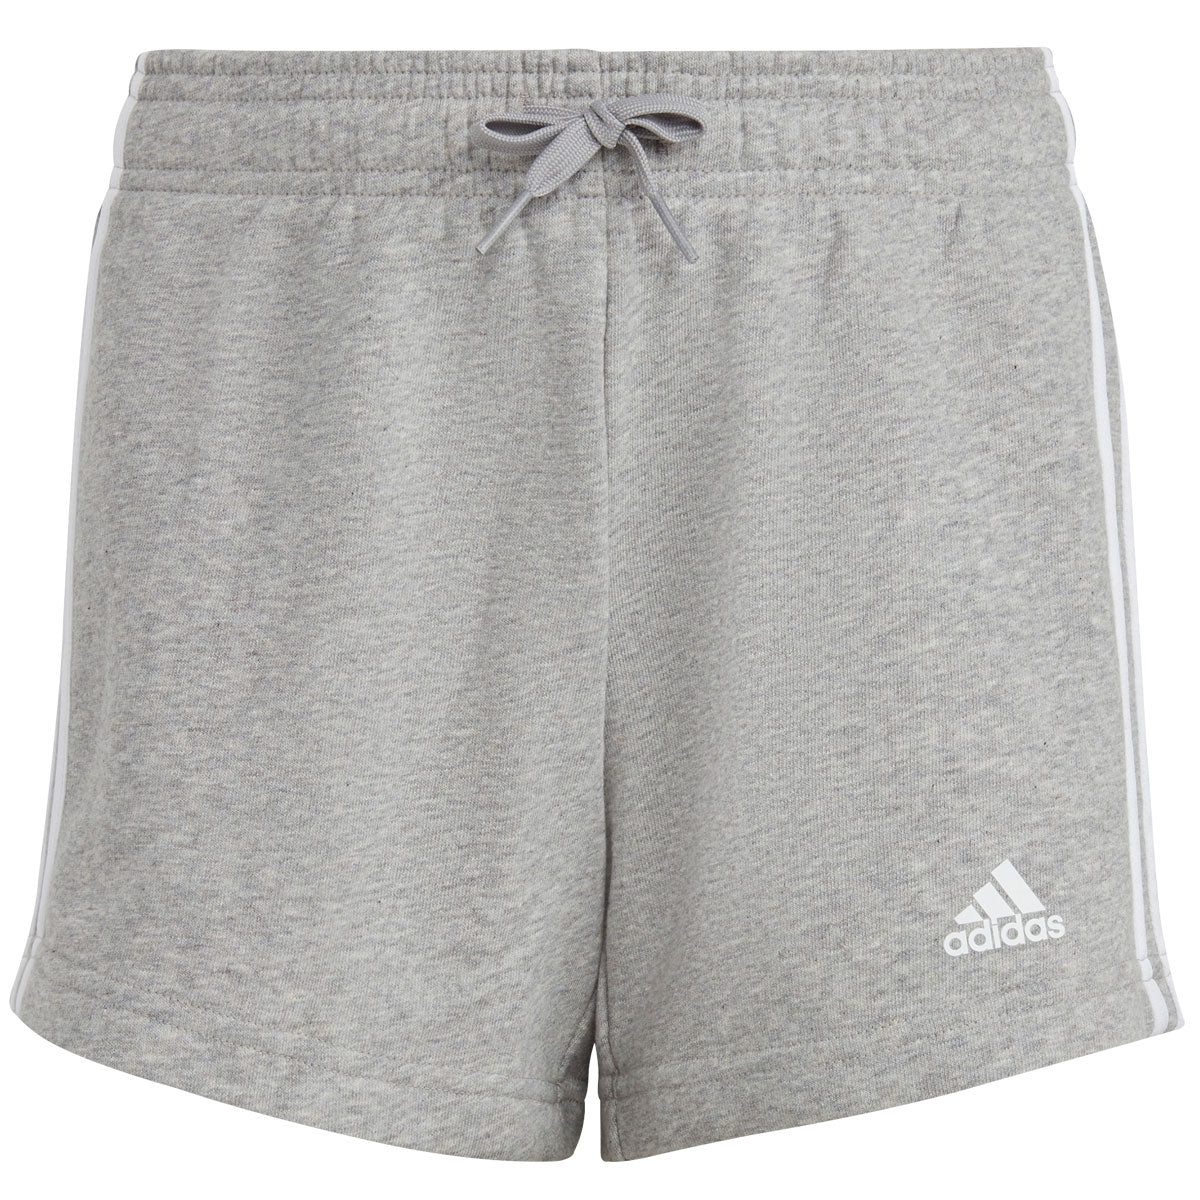 adidas 3 Stripe Shorts - Girls - Grey/White